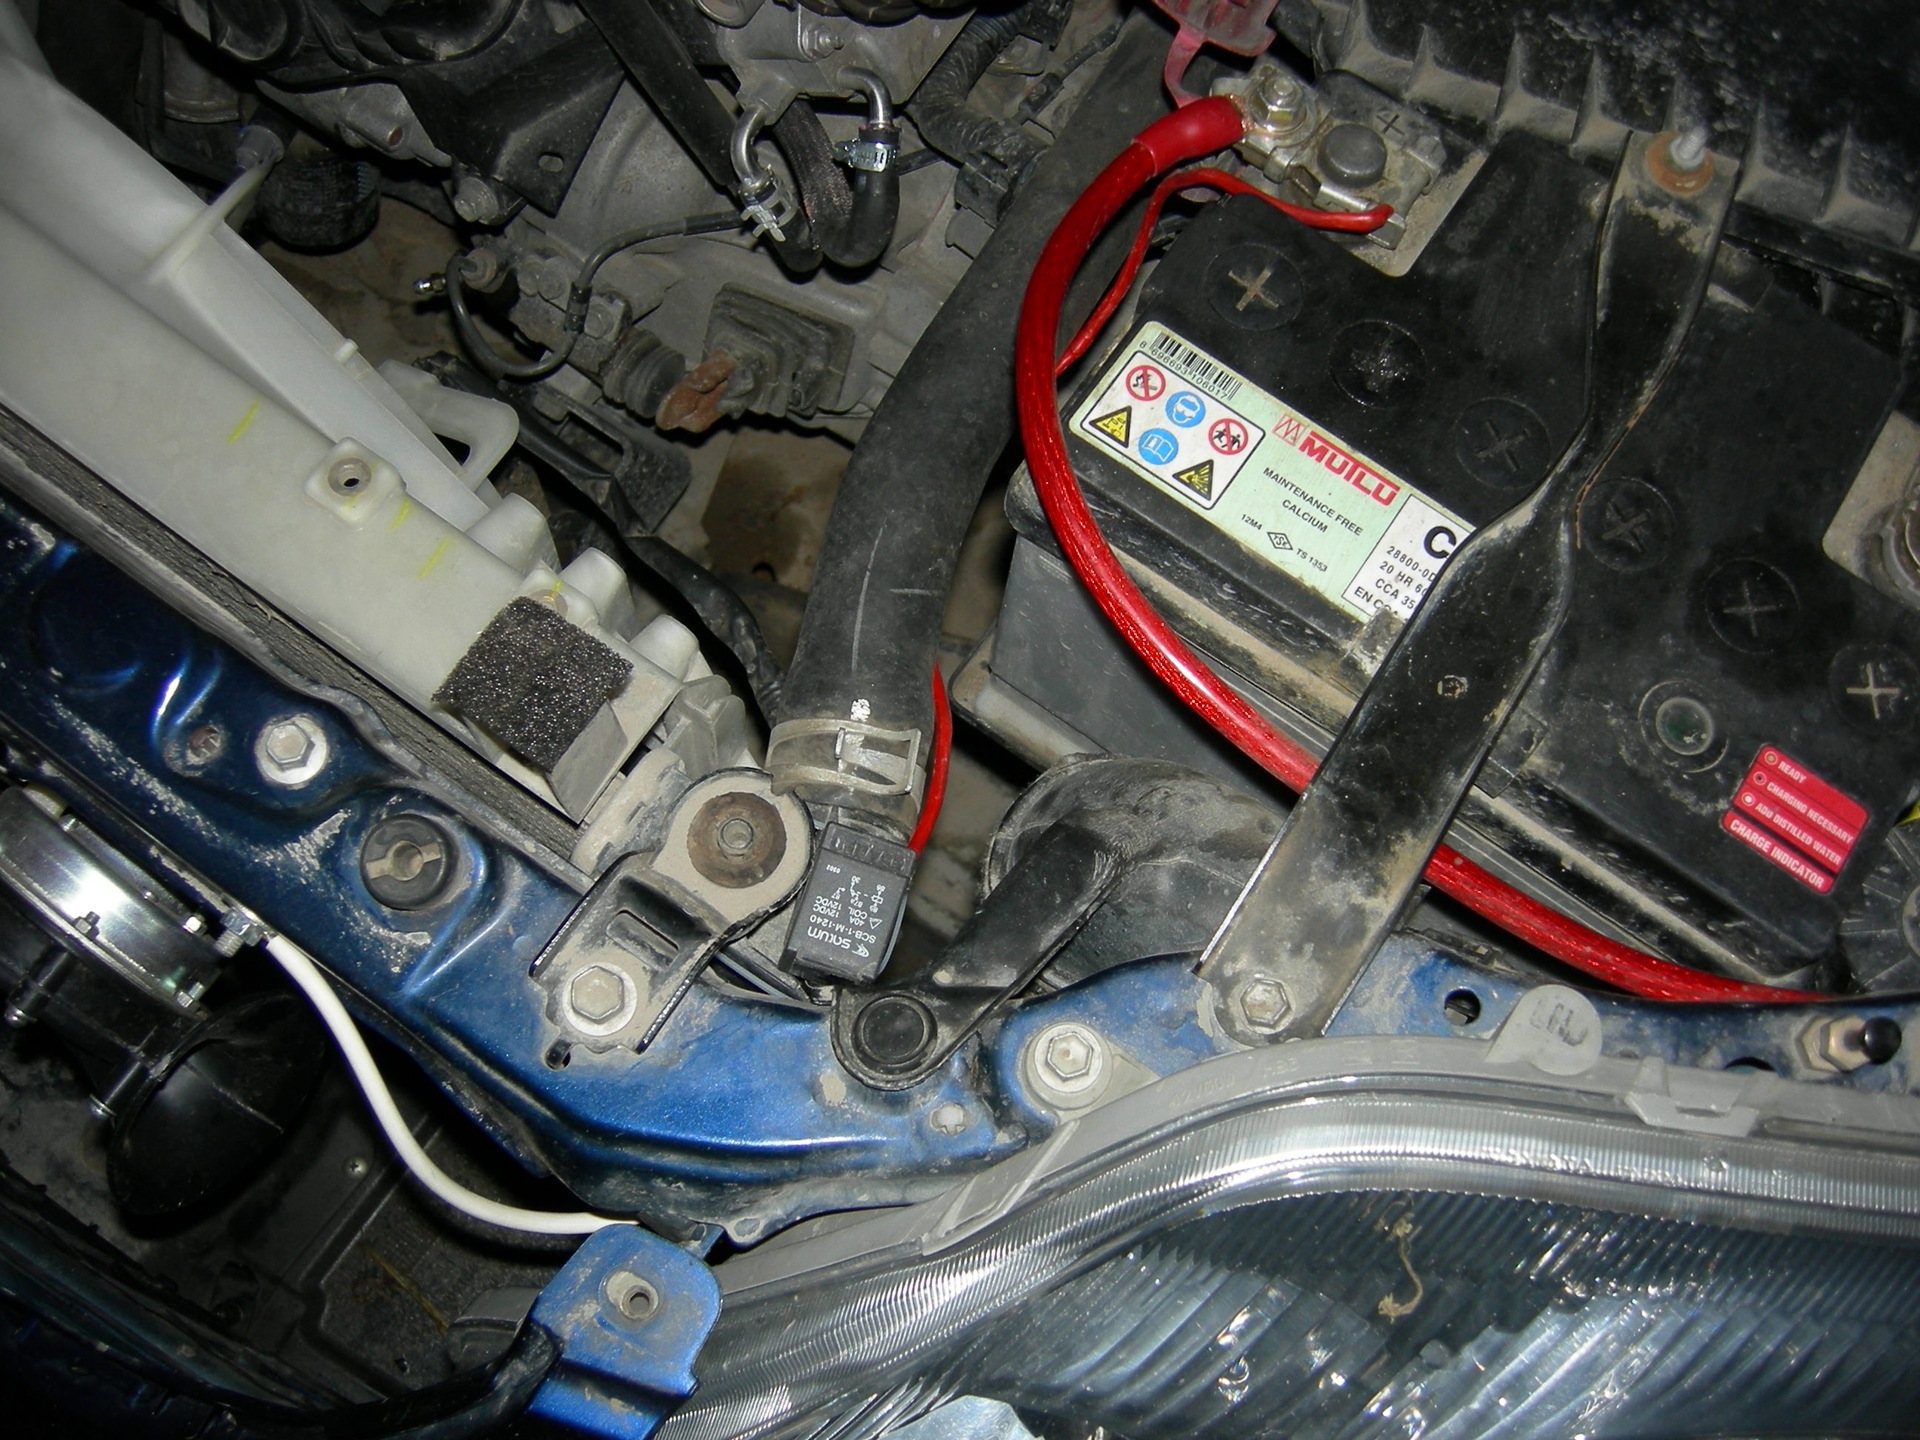 Updates for my lali - Toyota Corolla 16 liter 2005